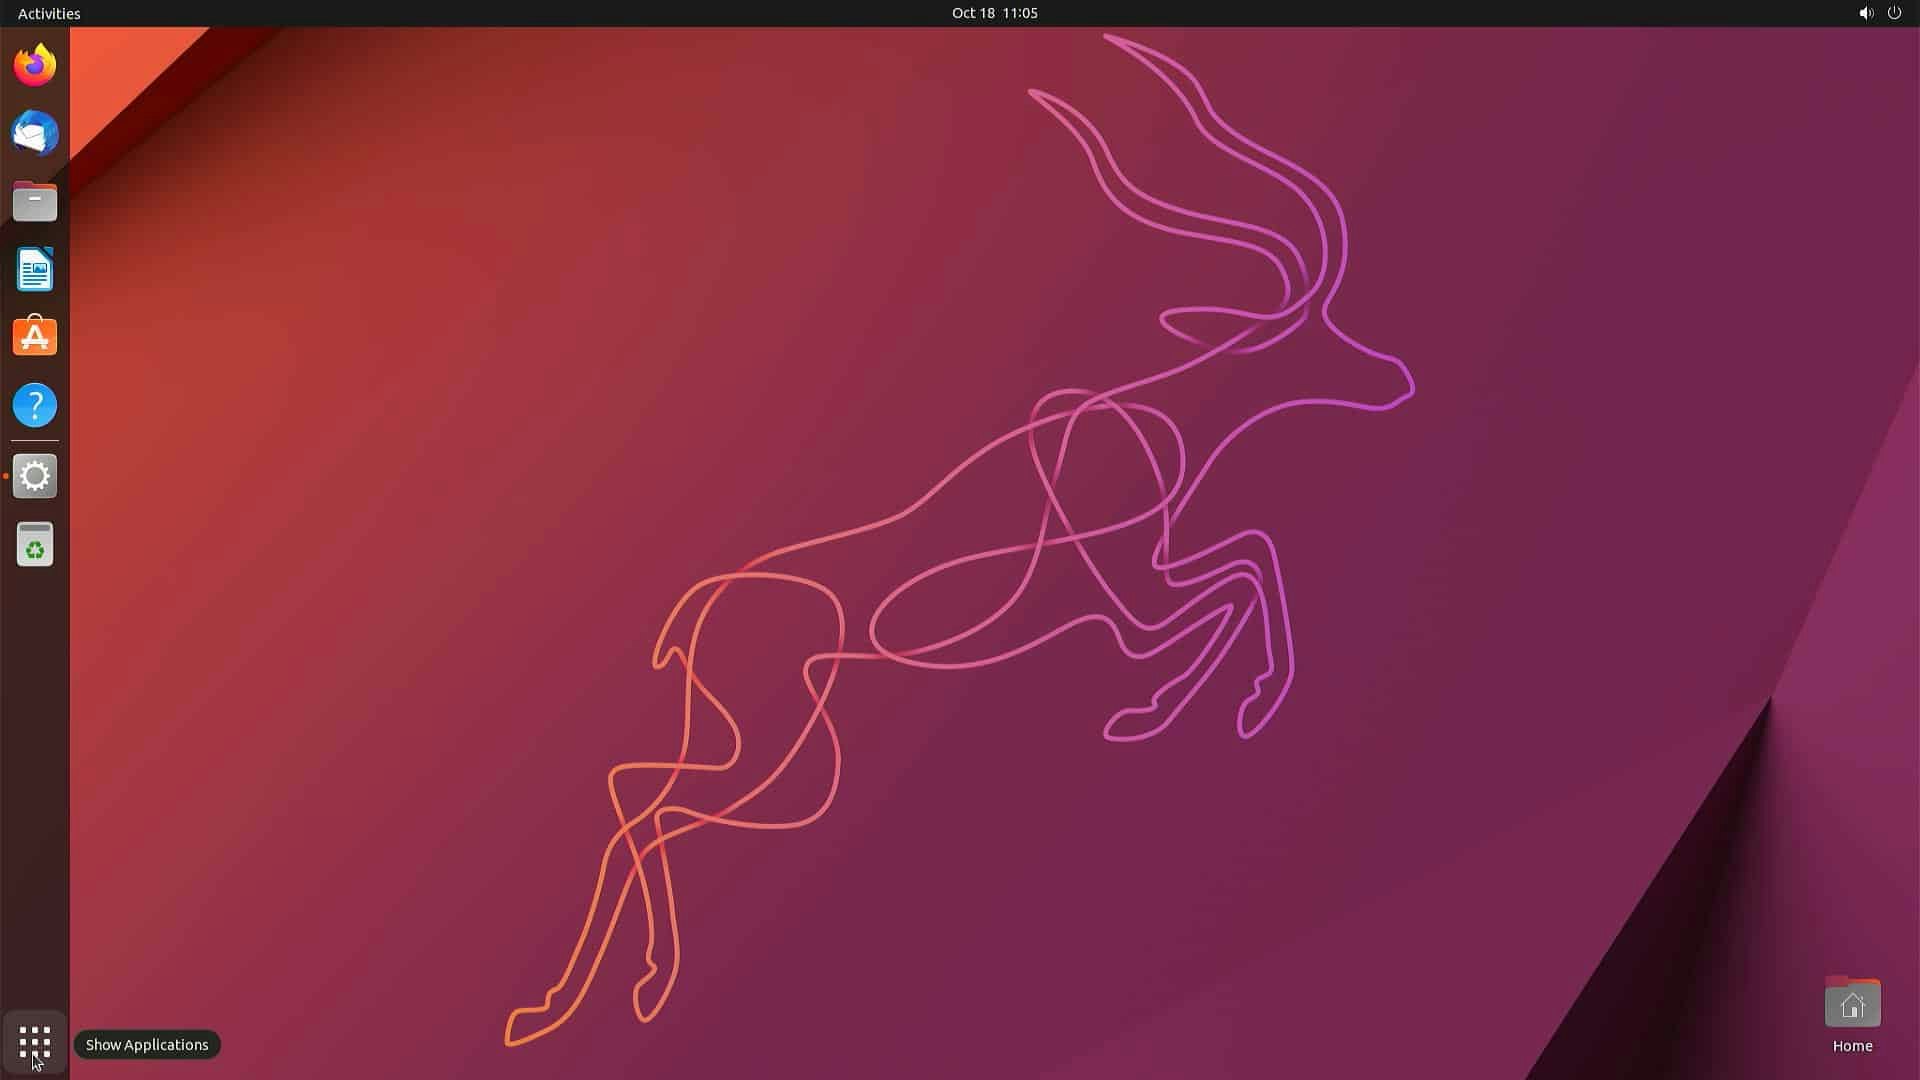 Ubuntu Desktop Is Running On The Raspberry Pi